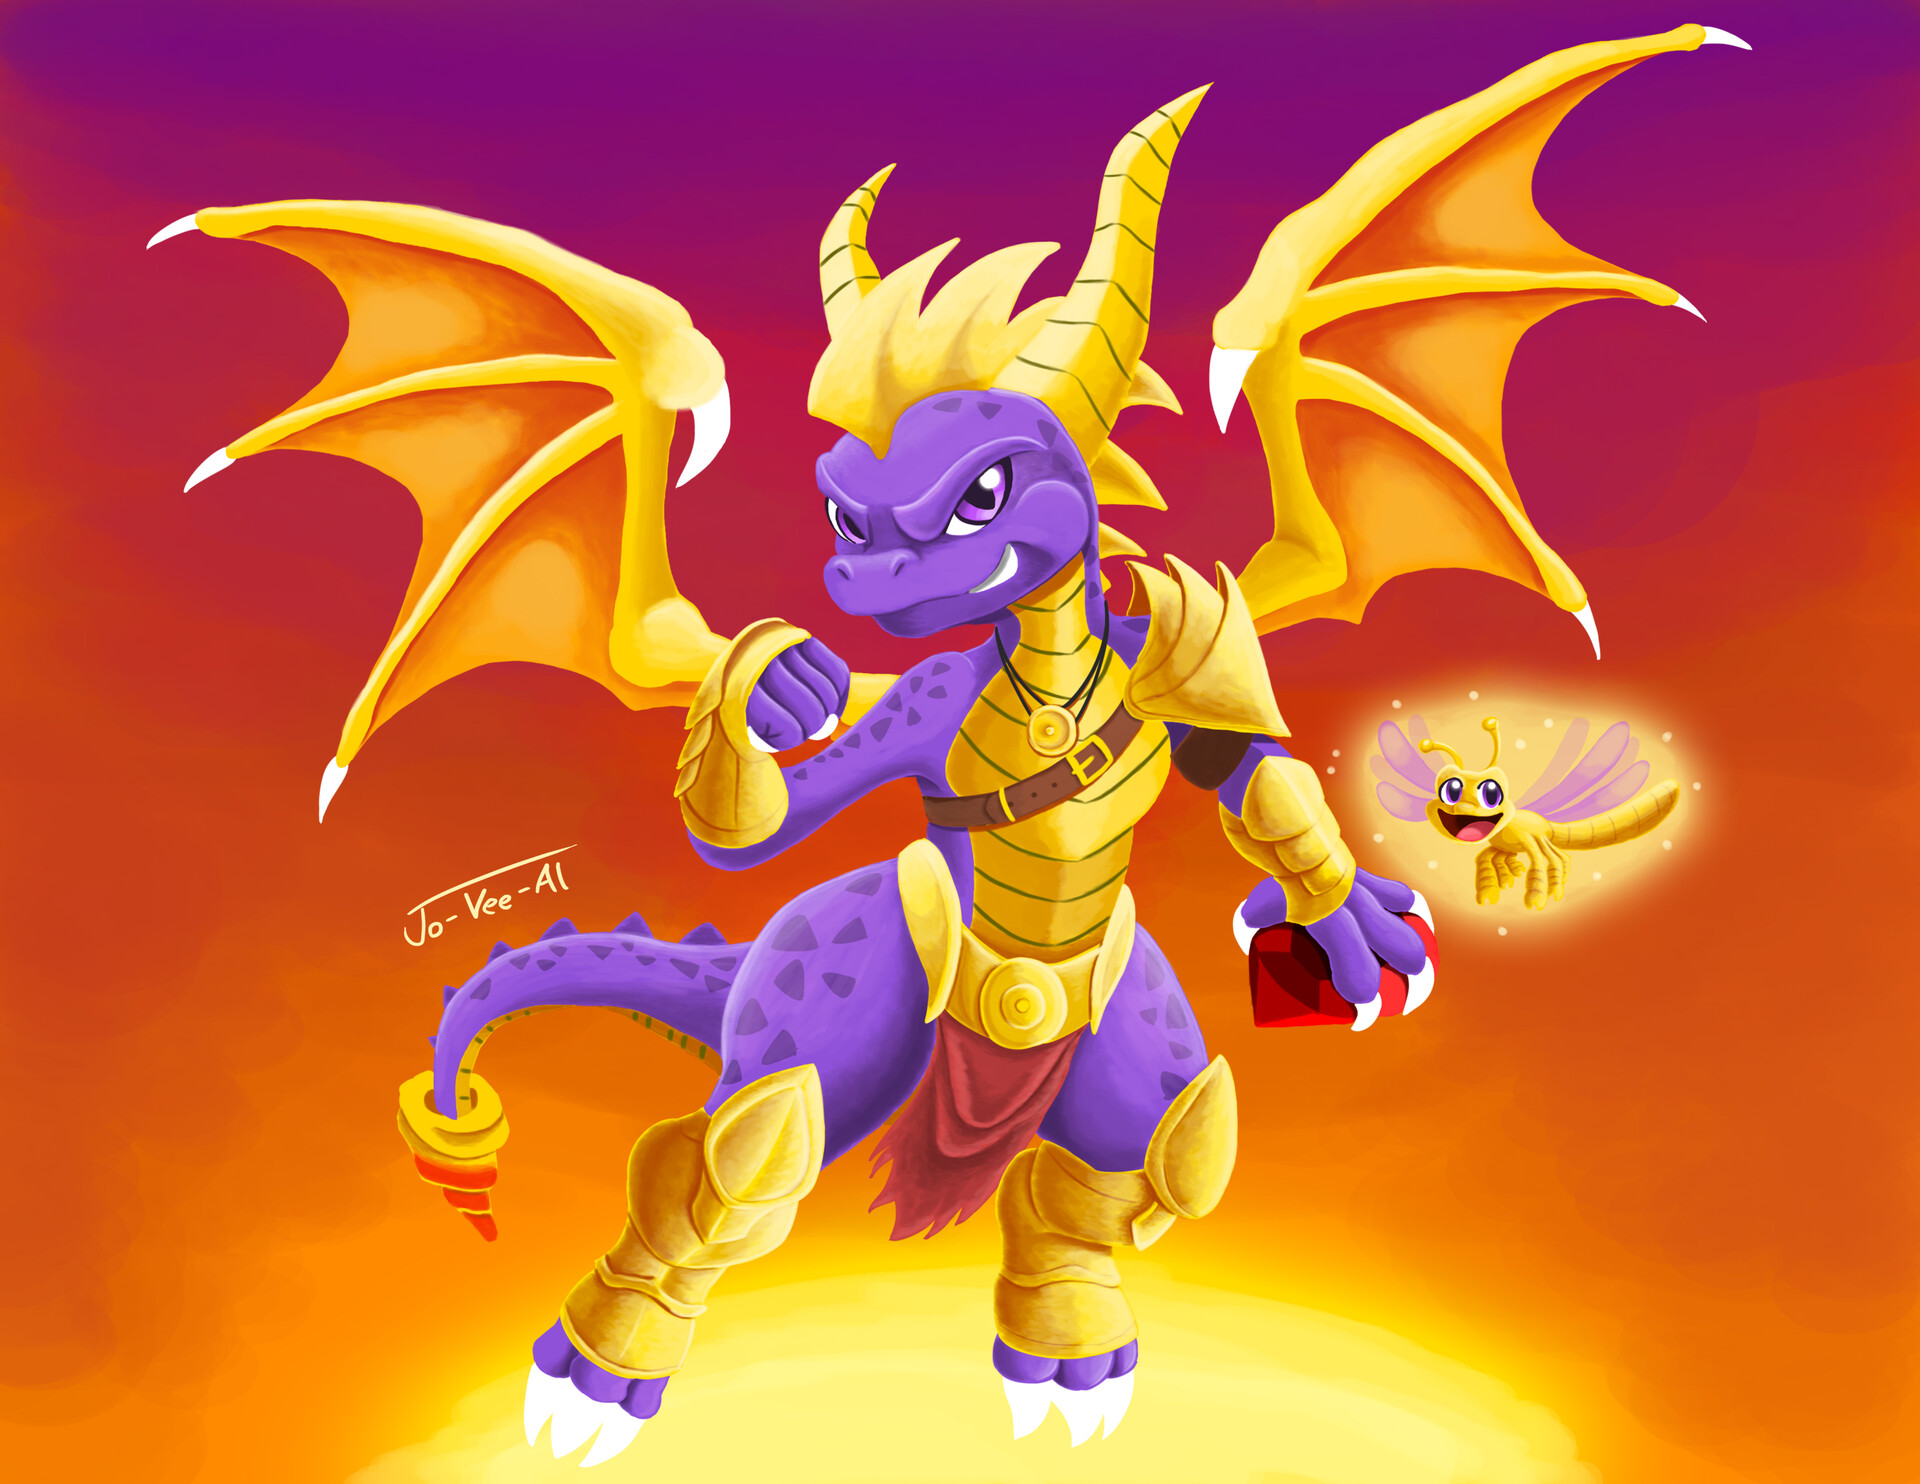 This is anthro fanart depiction of Spyro the Dragon alongside his sidekick,...